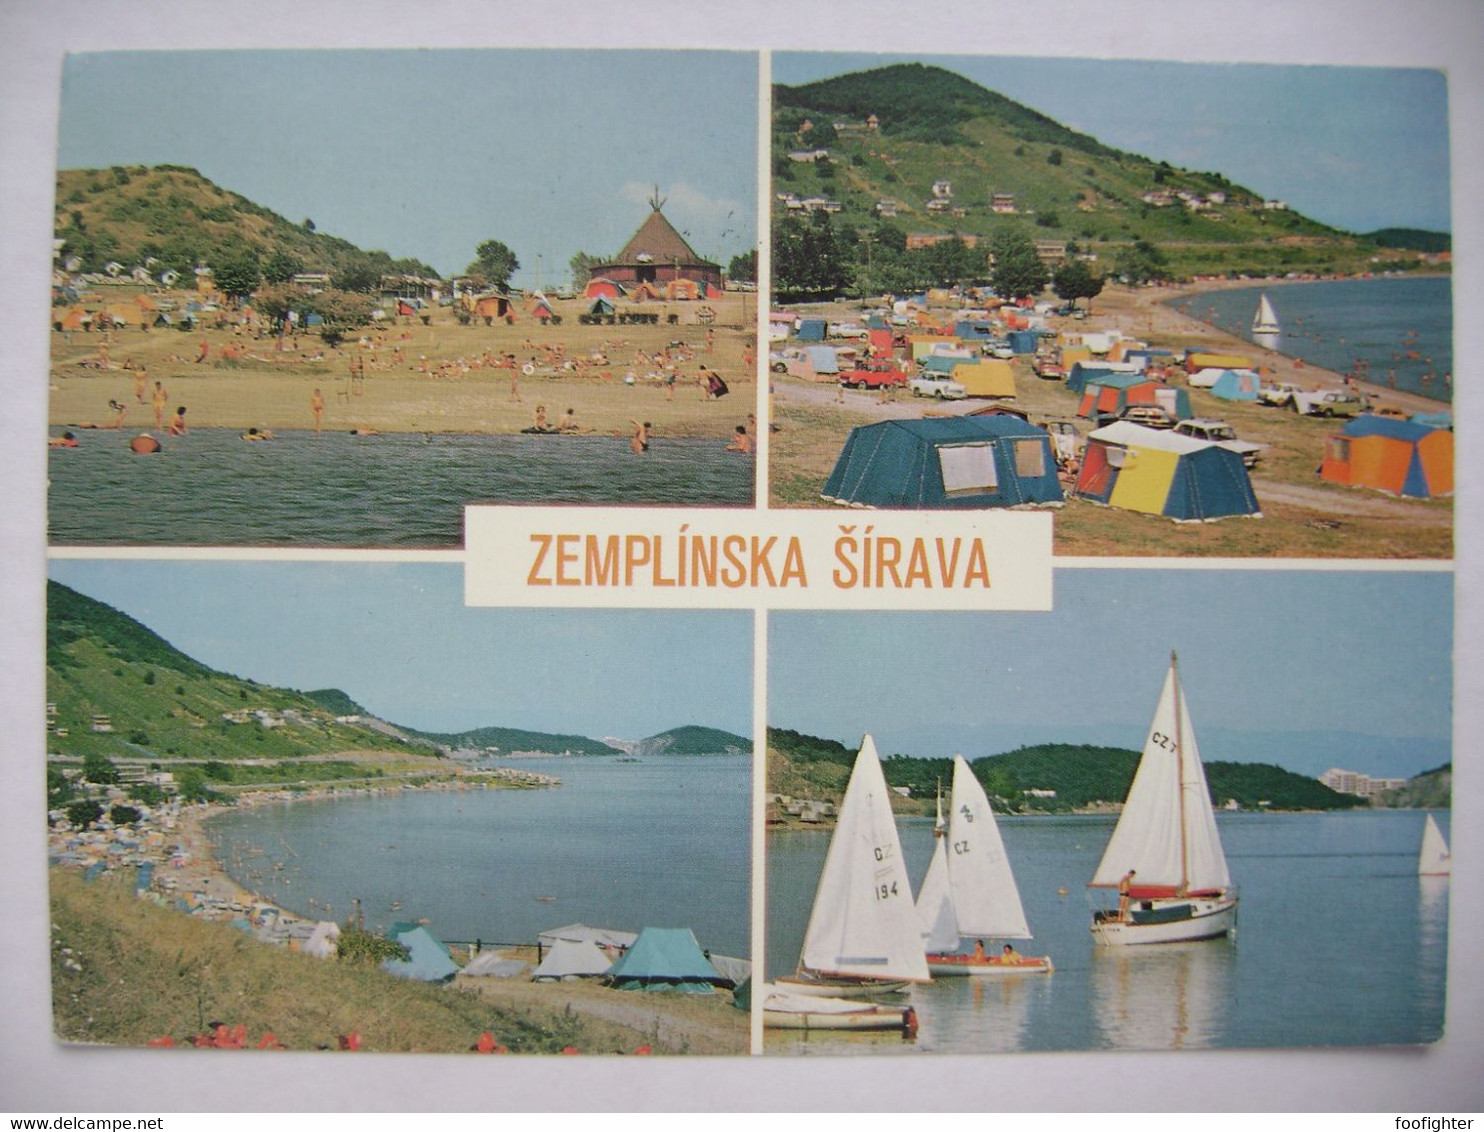 Zemplinska Sirava - Okres Michalovce, Plaz, Camping, Horka, Jachting - Posted 1985 - Slovaquie